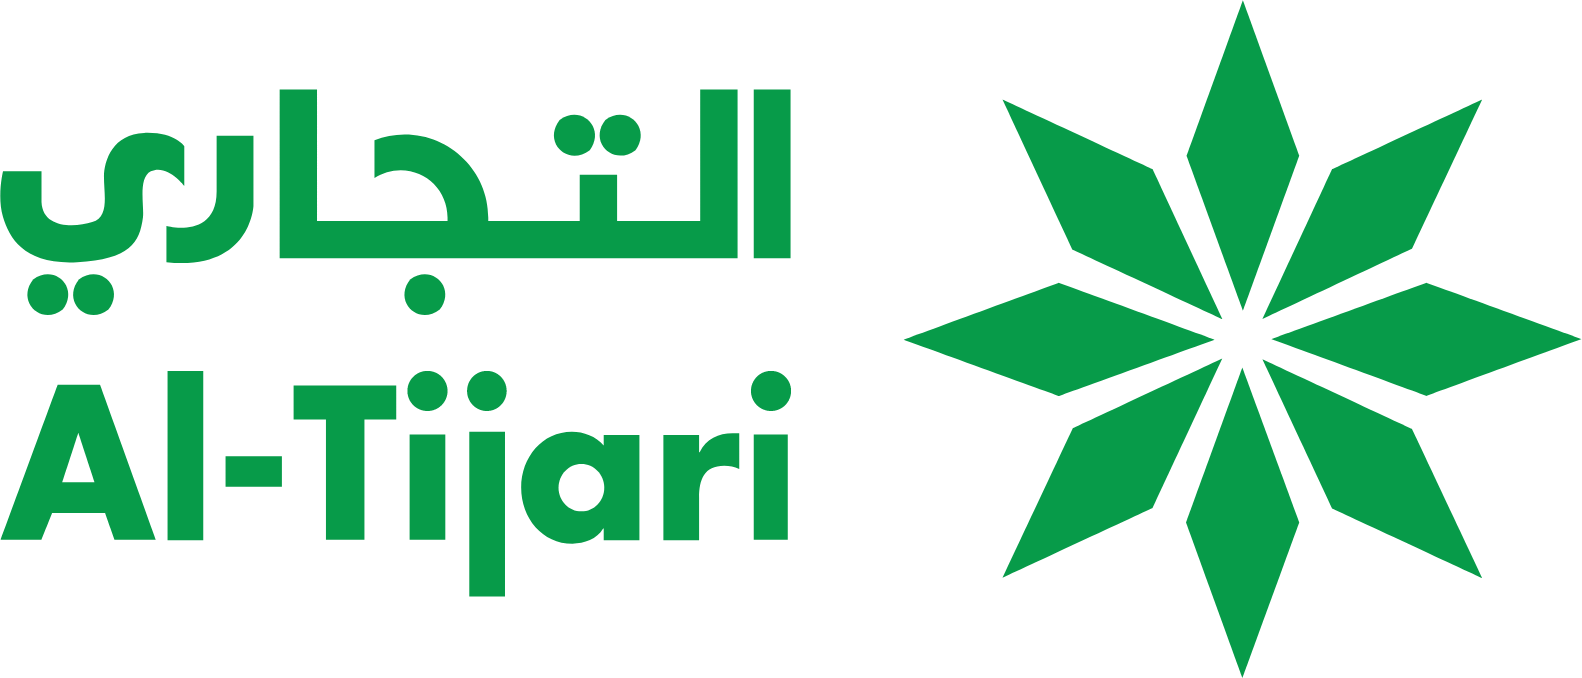 Commercial Bank of Kuwait logo large (transparent PNG)